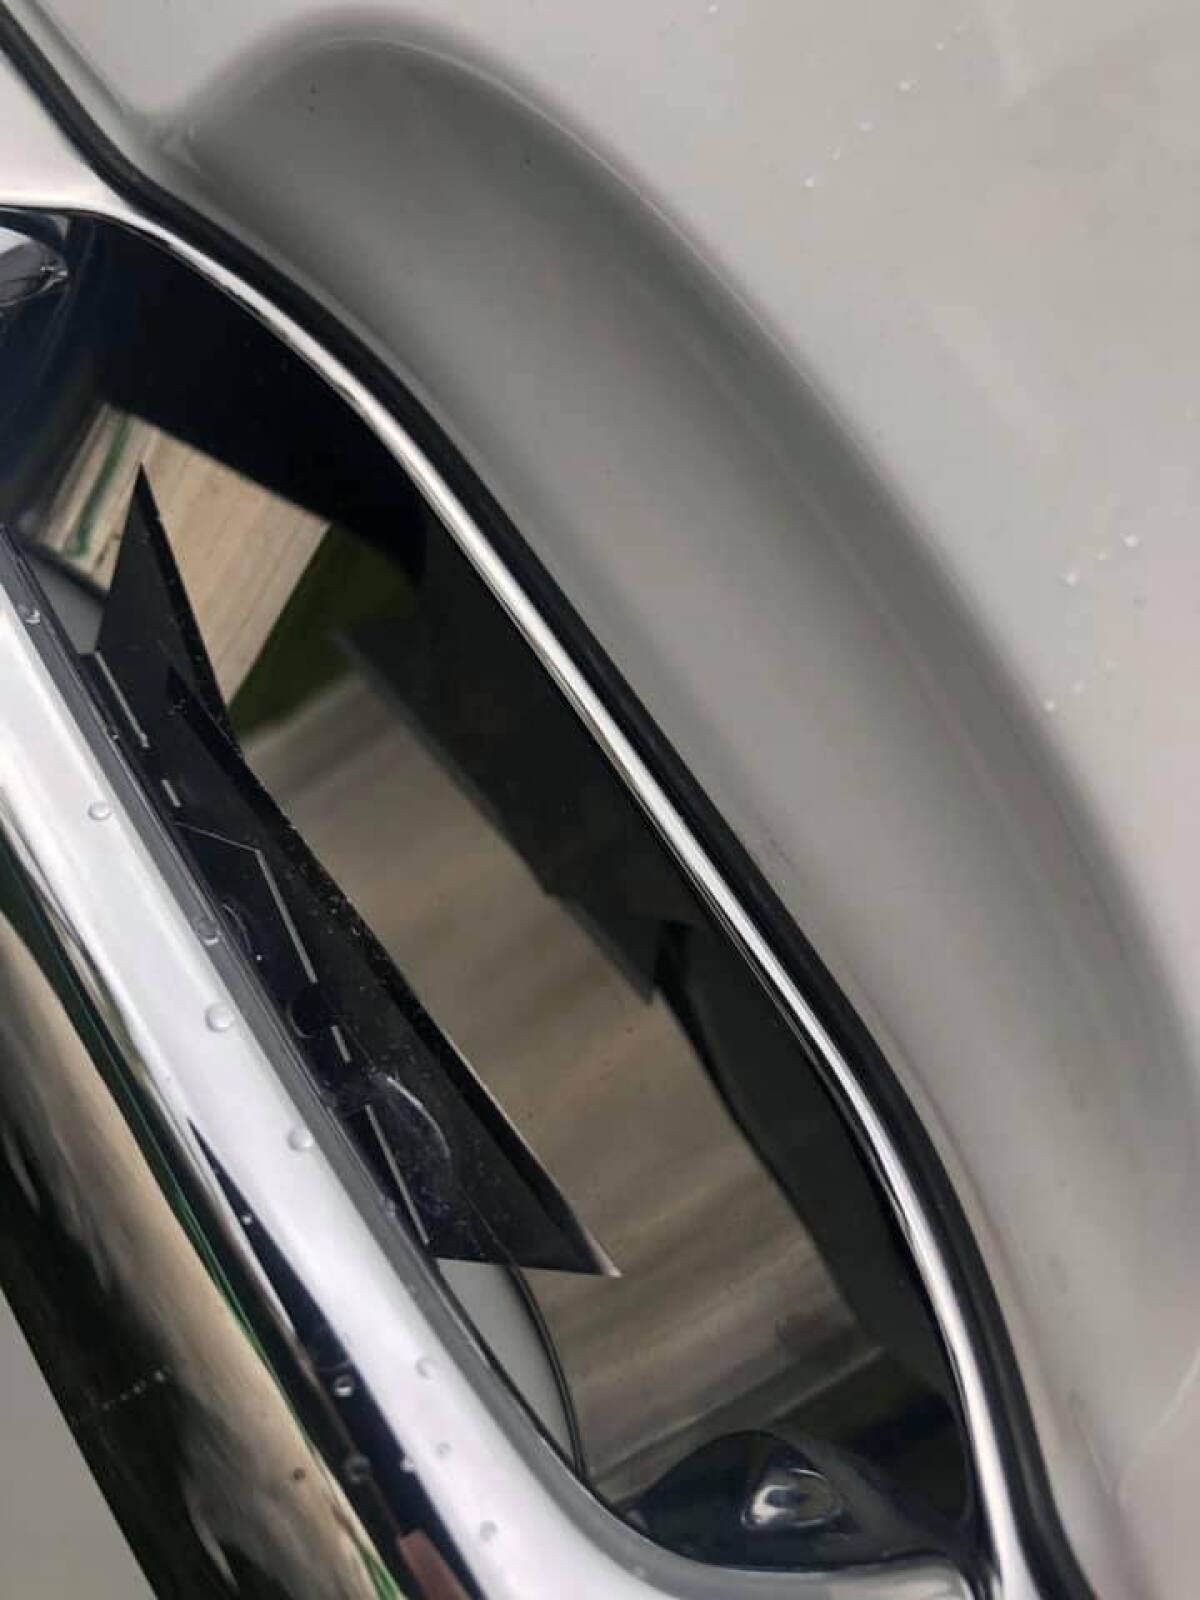 A motorist in Temecula found razor blades affixed to a car door handle last week.